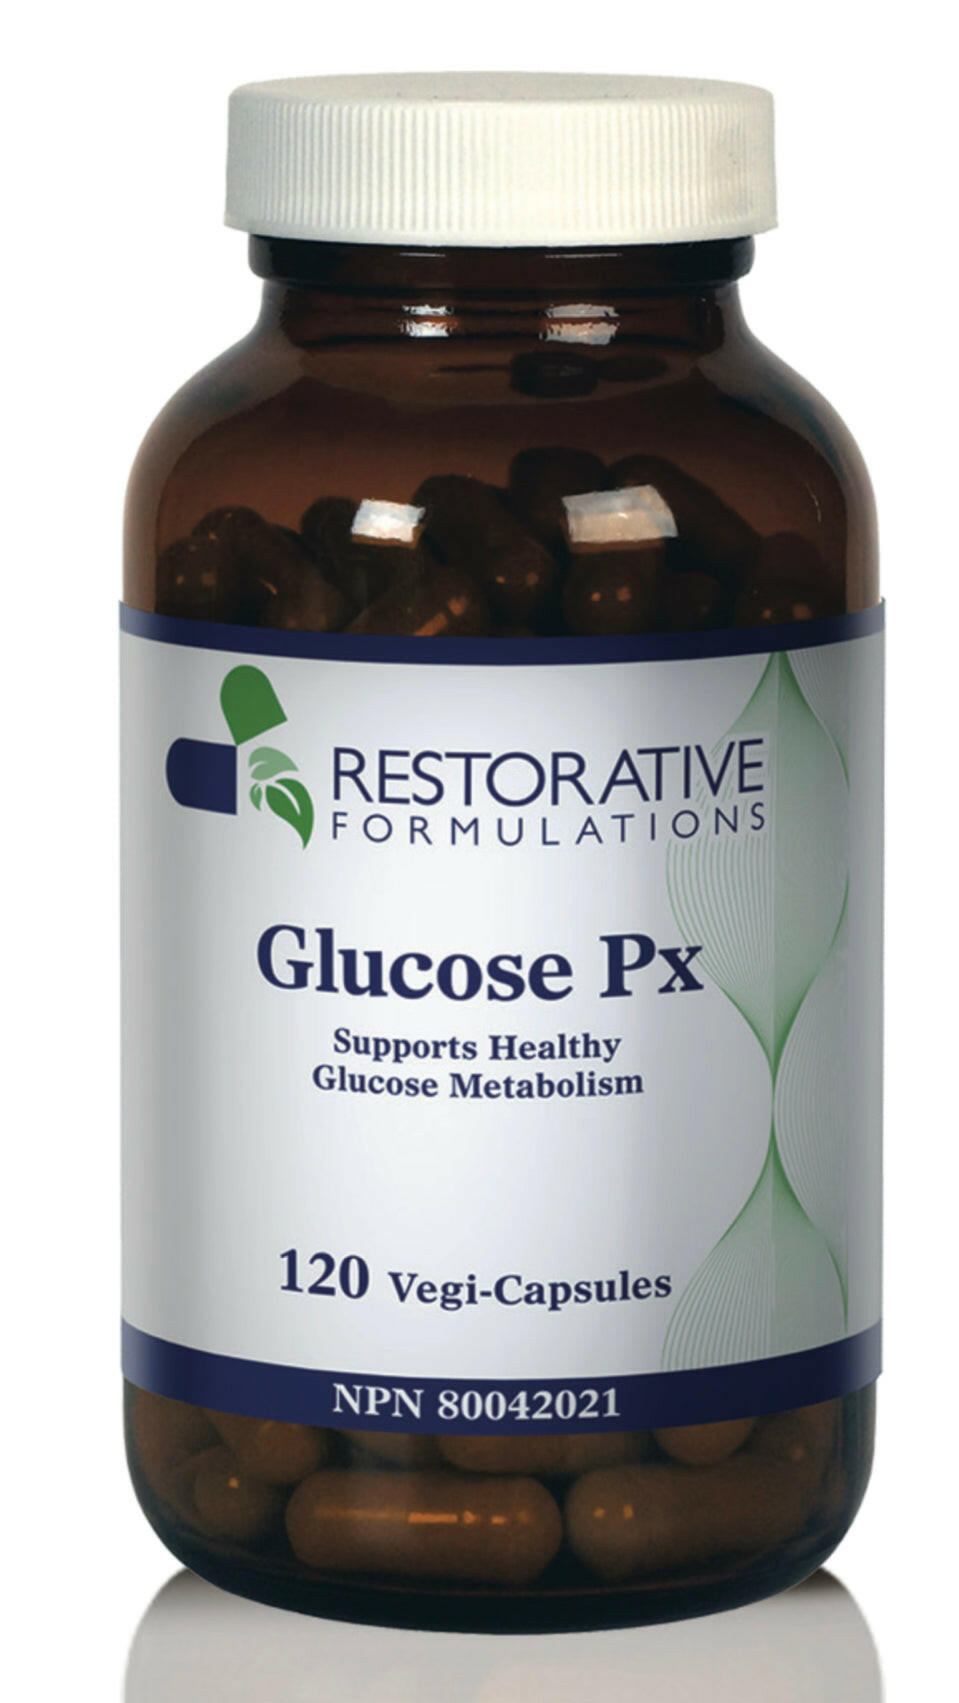 Restorative formulations Glucose Px (120 vcaps)